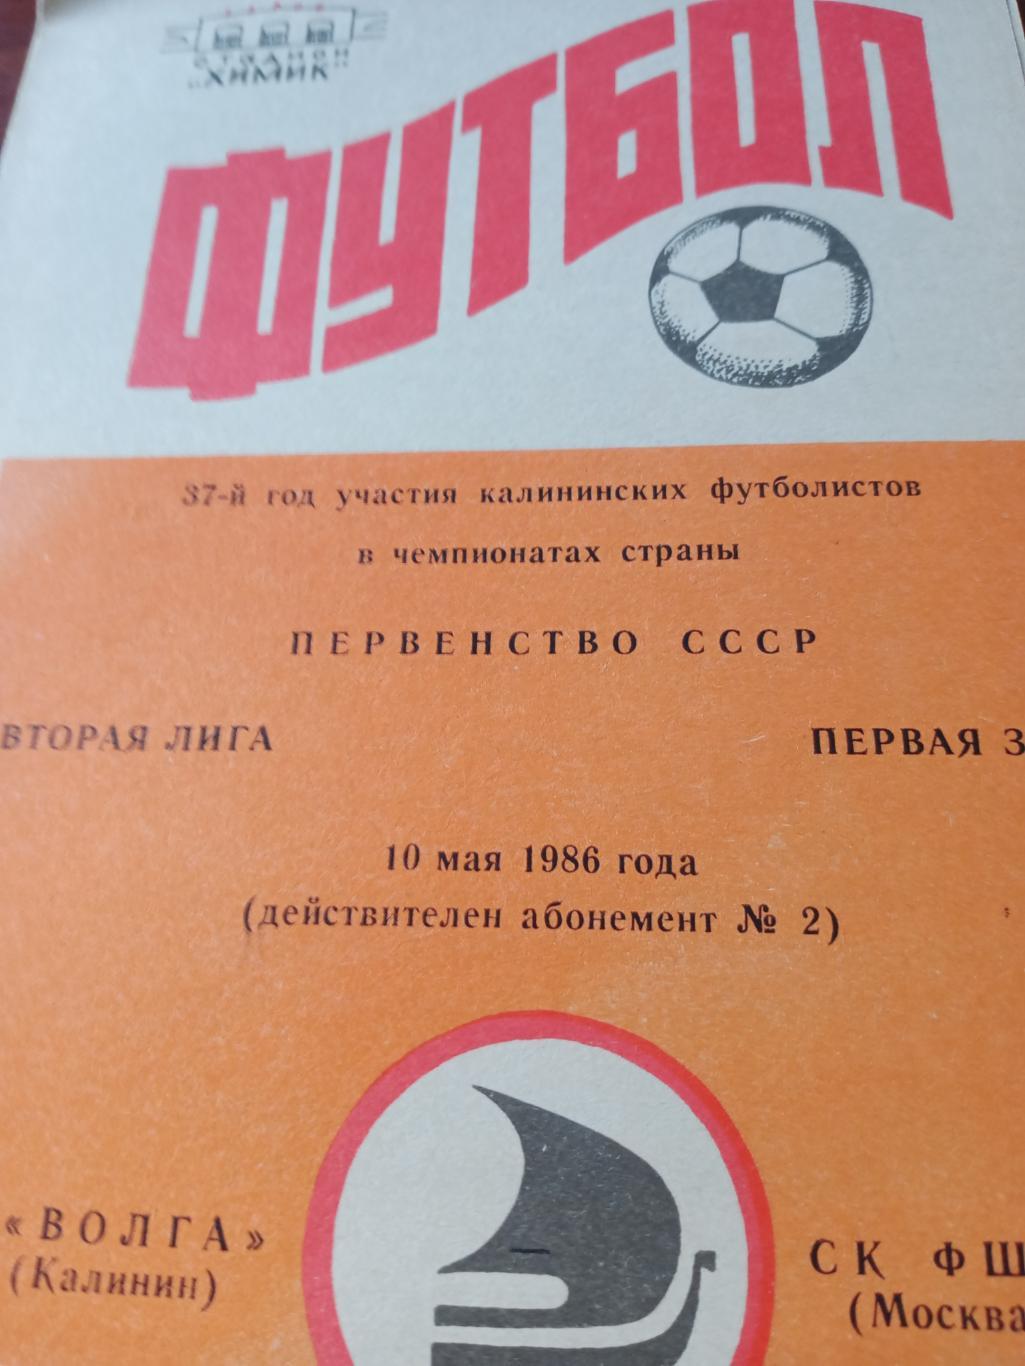 Волга Калинин - СК ФШМ Москва. 10 мая 1986 год